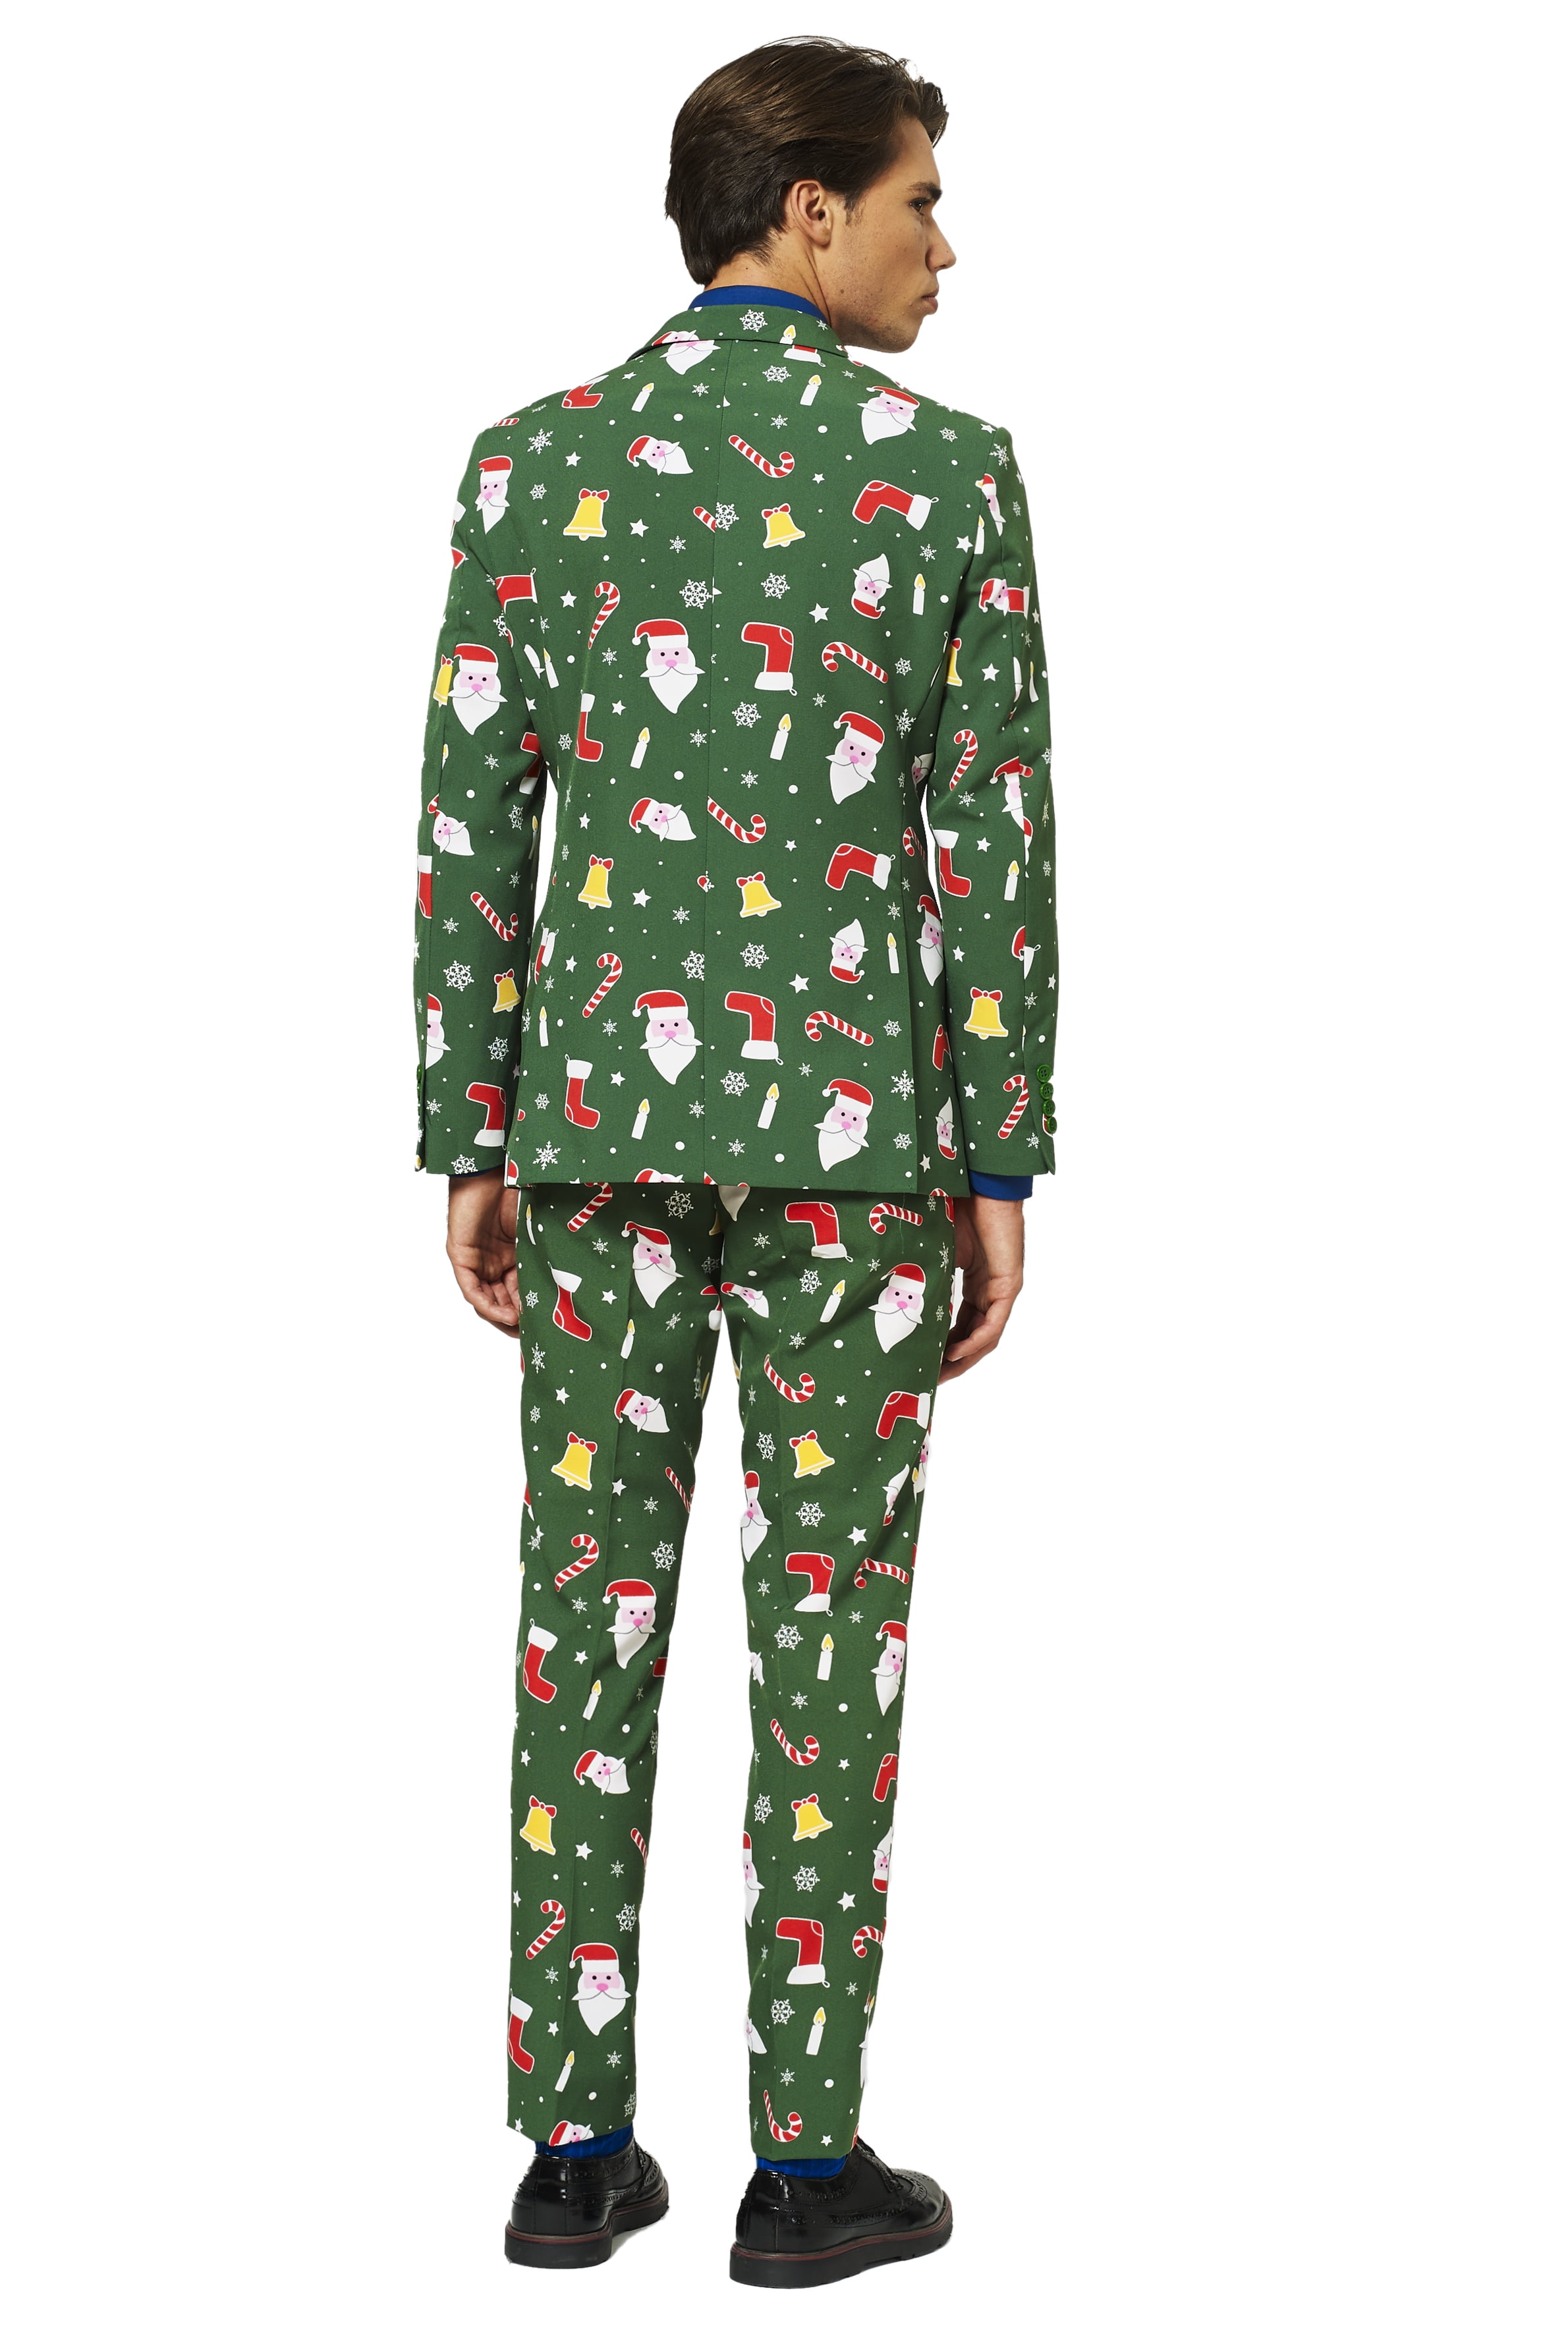 Santaboss Christmas Suit - Walmart 